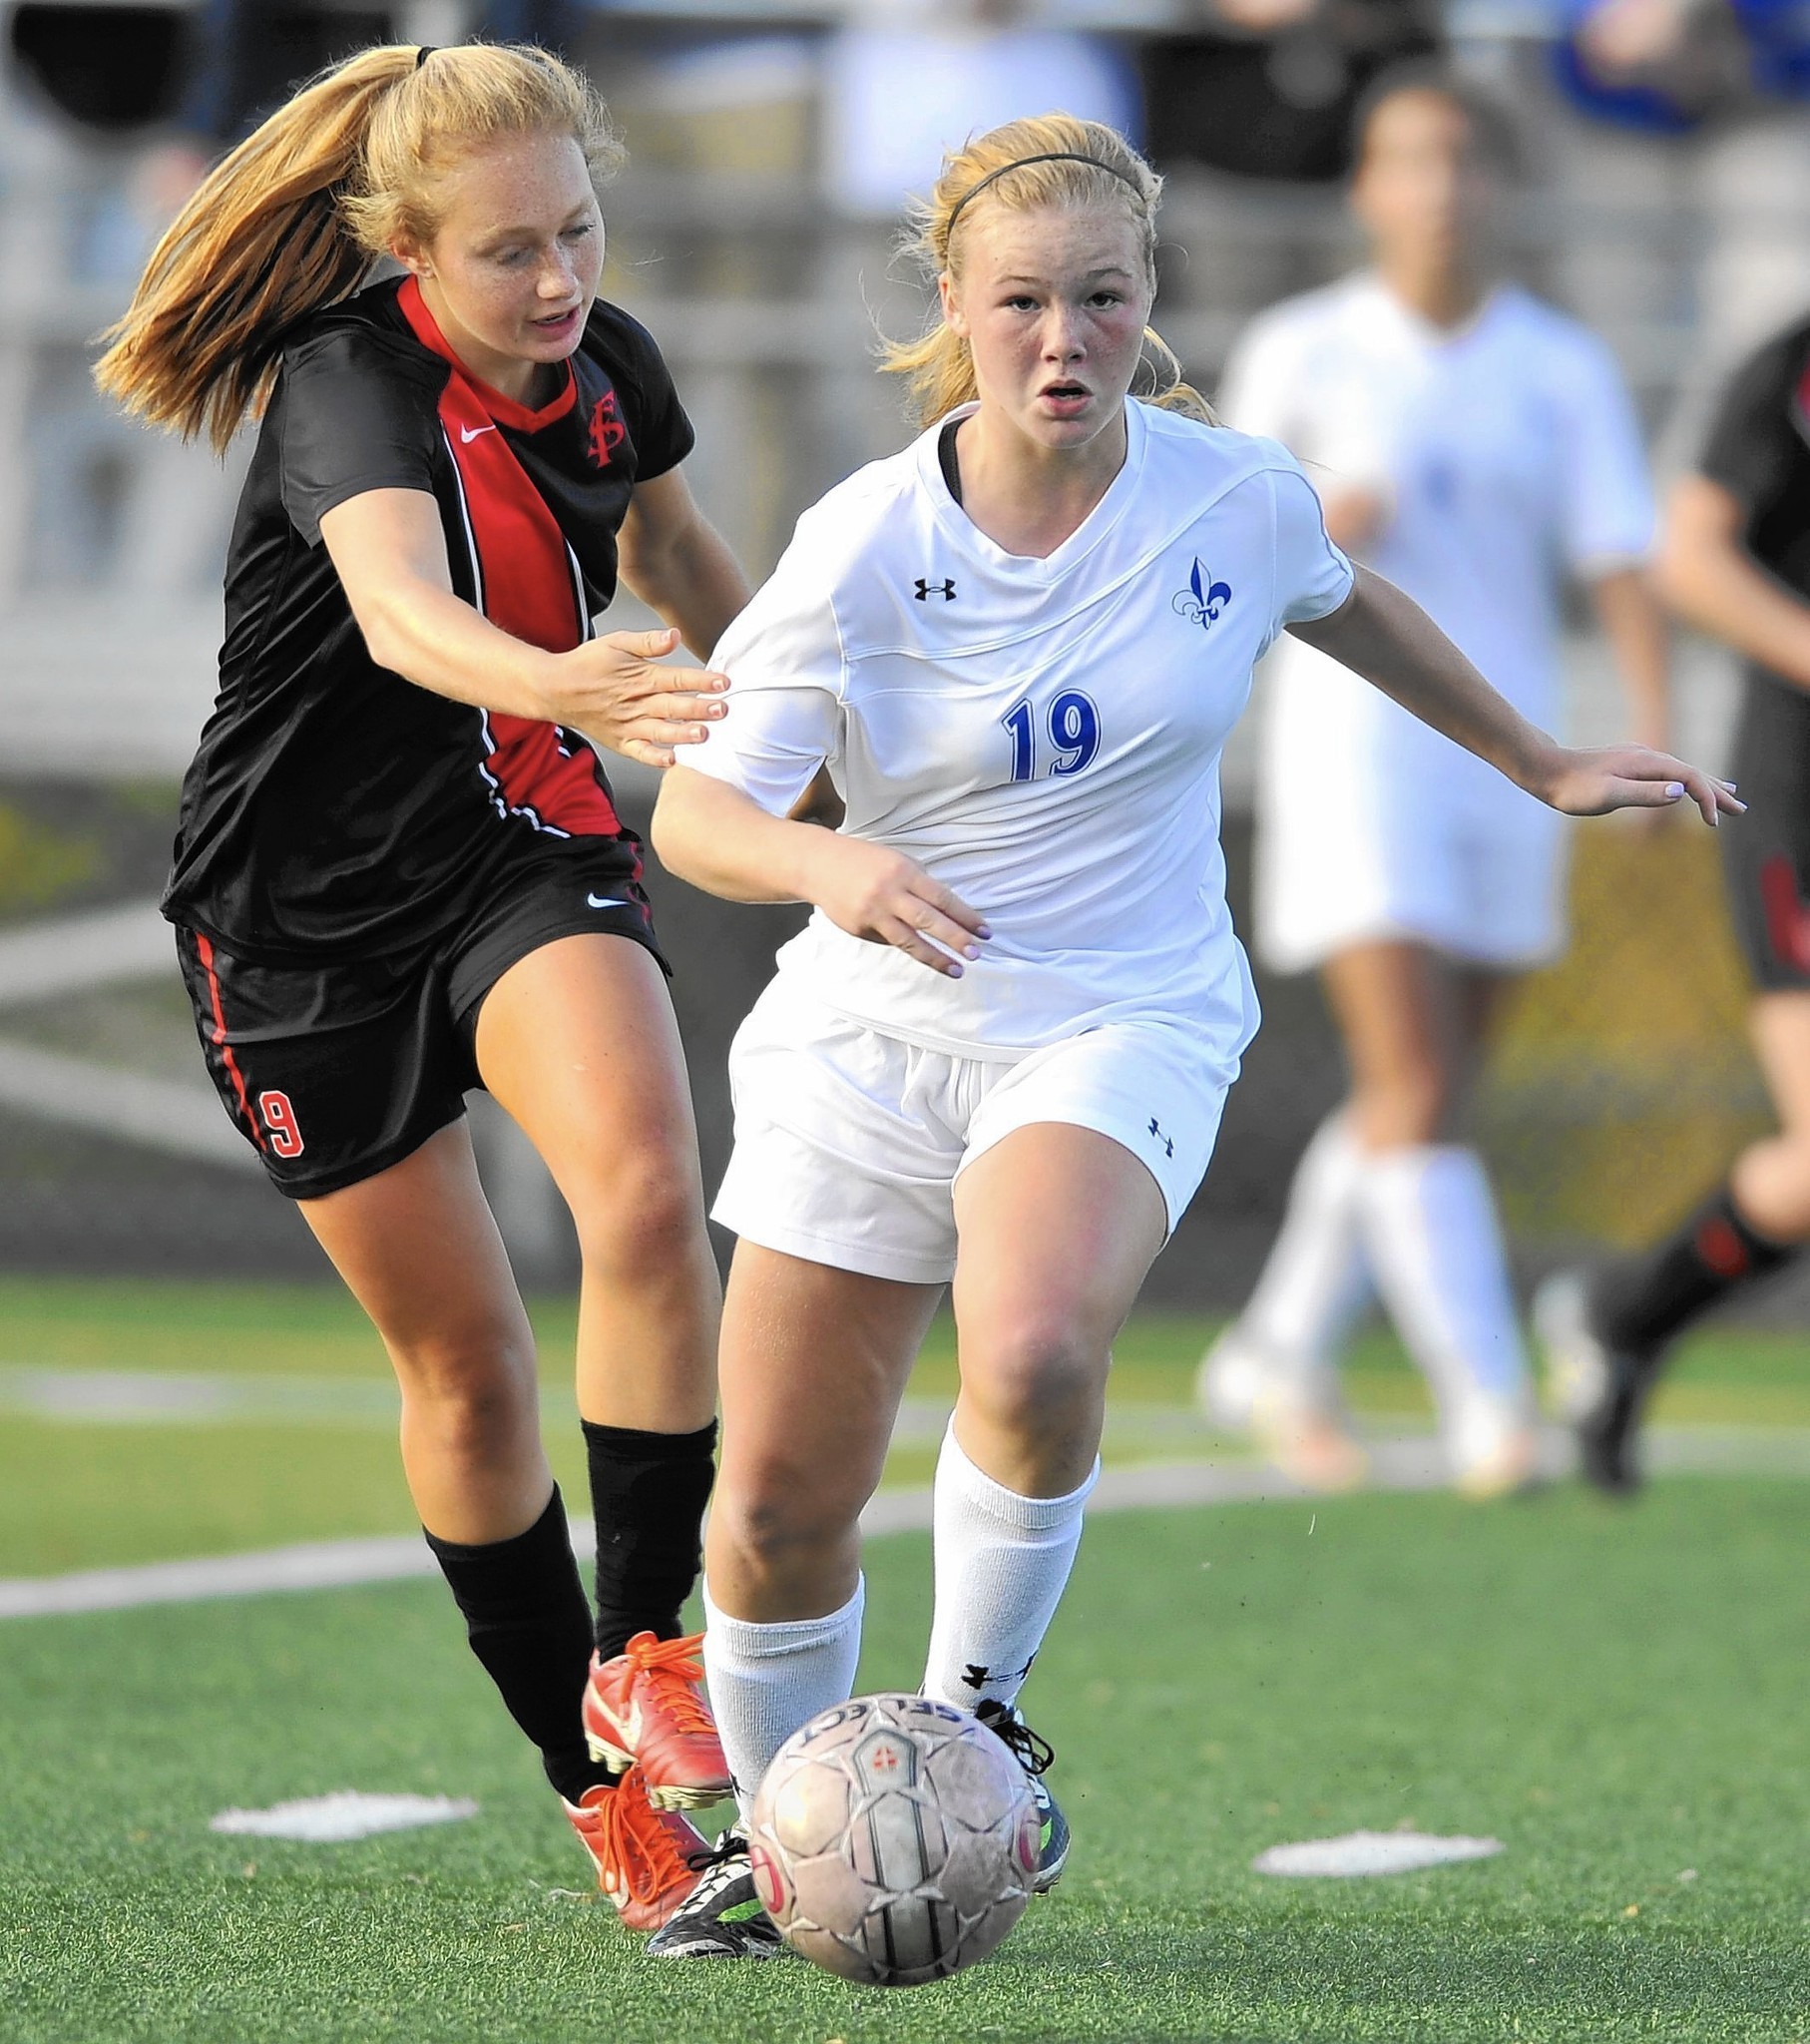 Season preview: 2015 high school girls soccer outlooks - Capital Gazette